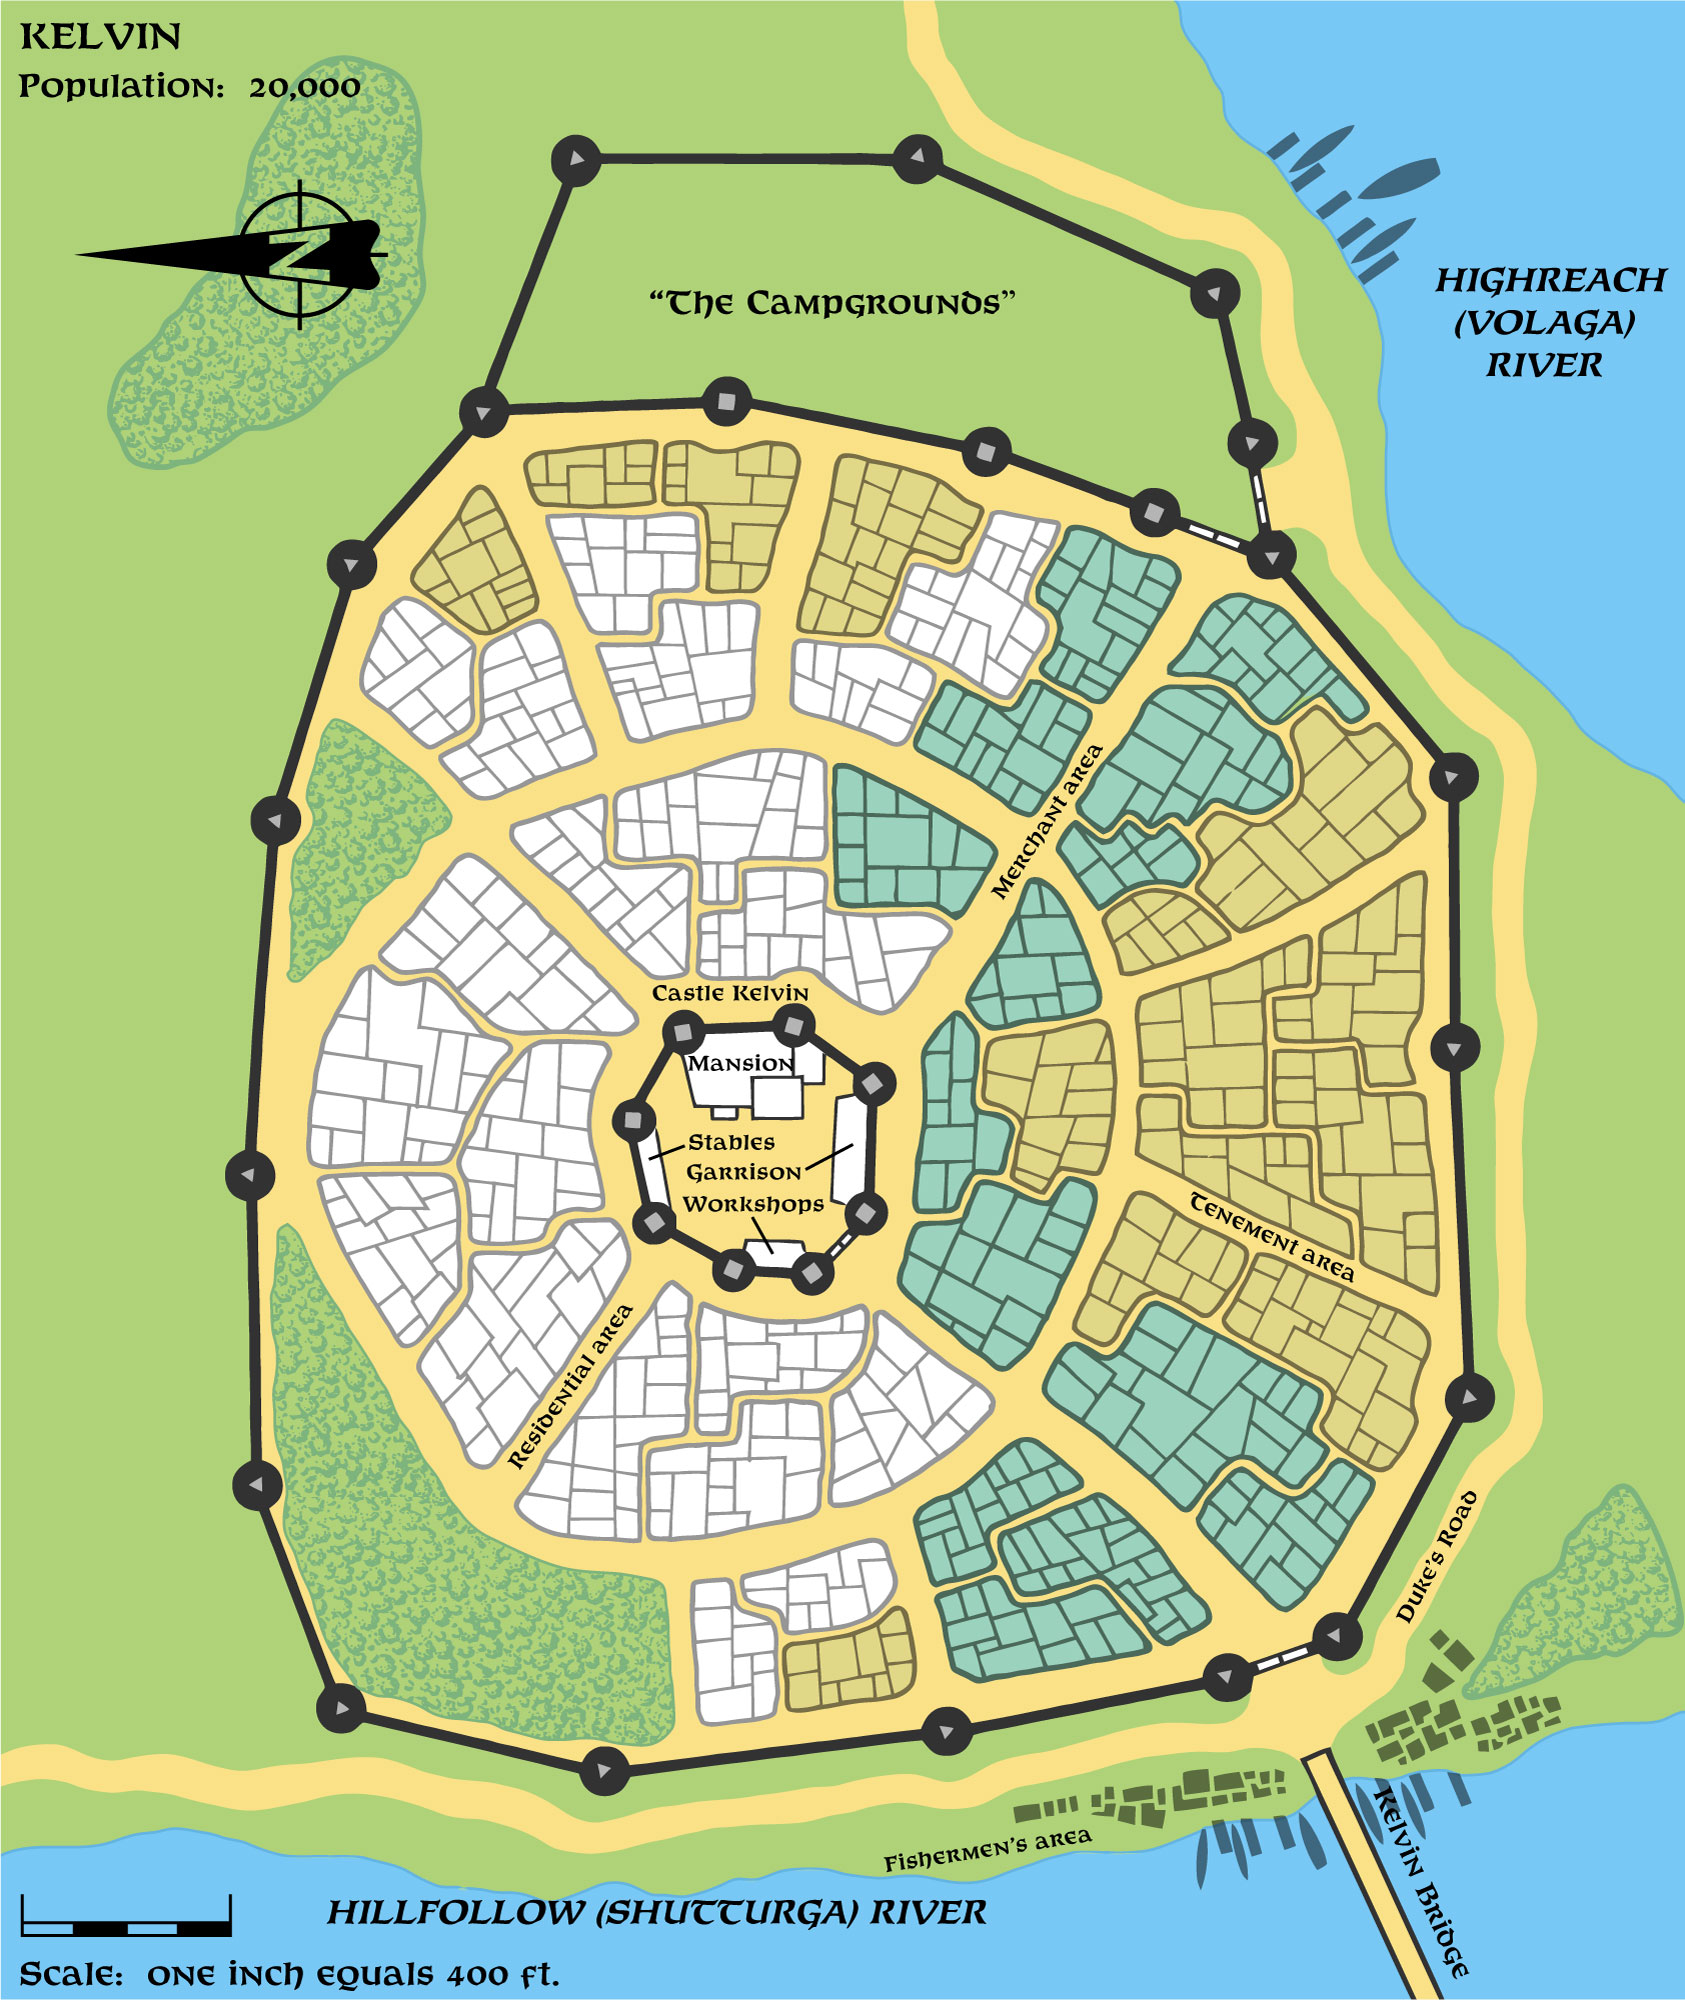 Replica of GAZ1's Kelvin town map